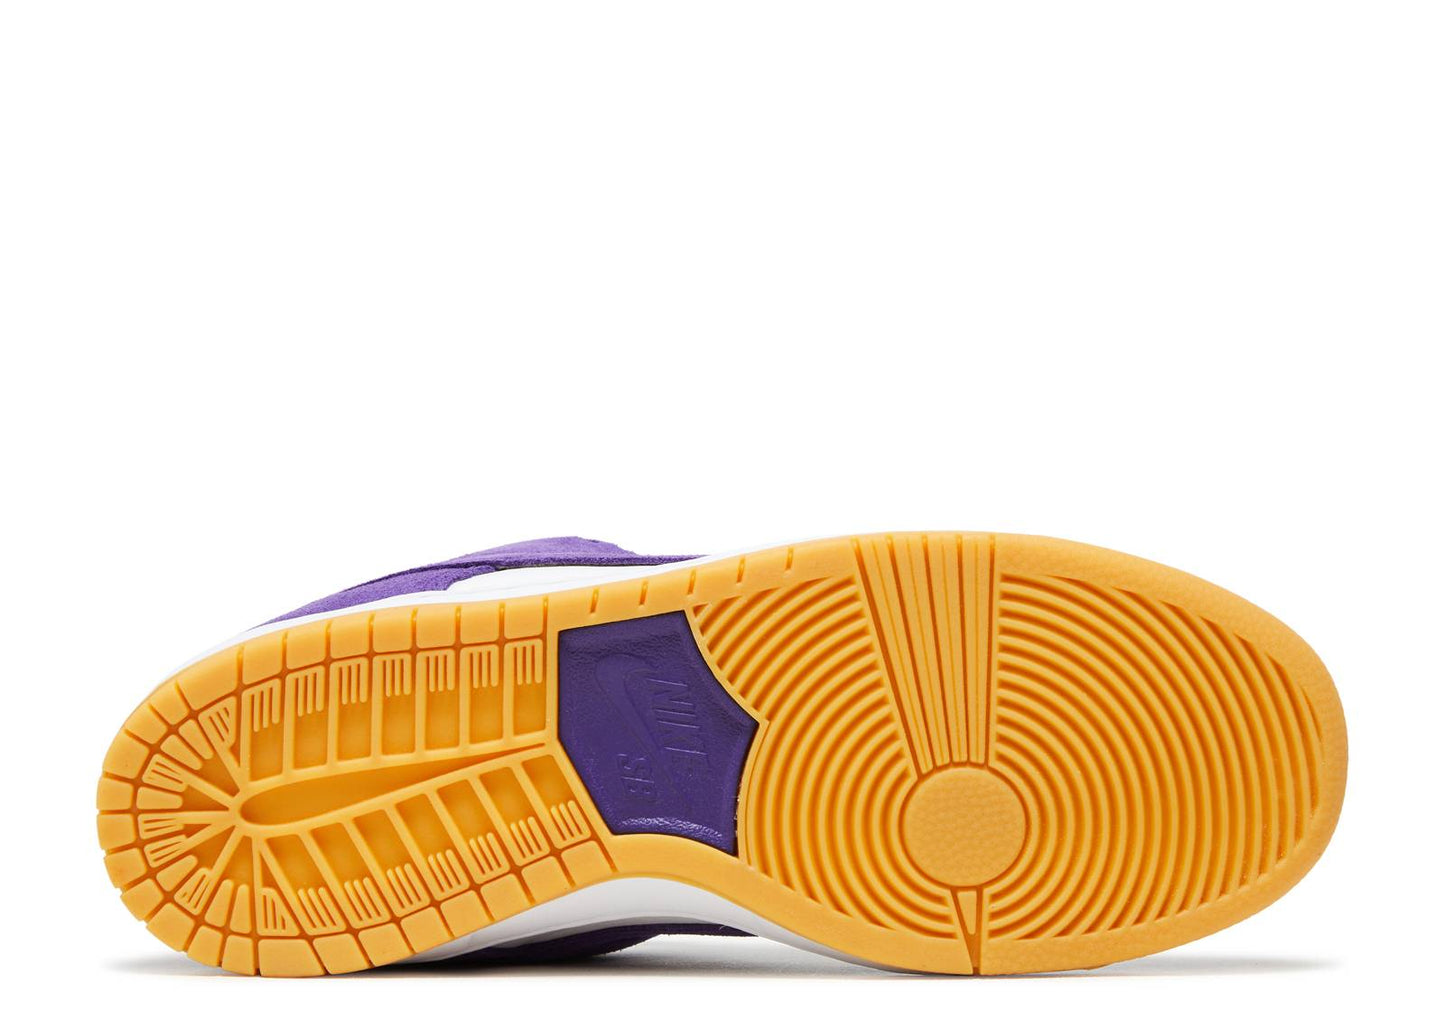 Nike SB Dunk Low Pro "Purple Suede/Gum"